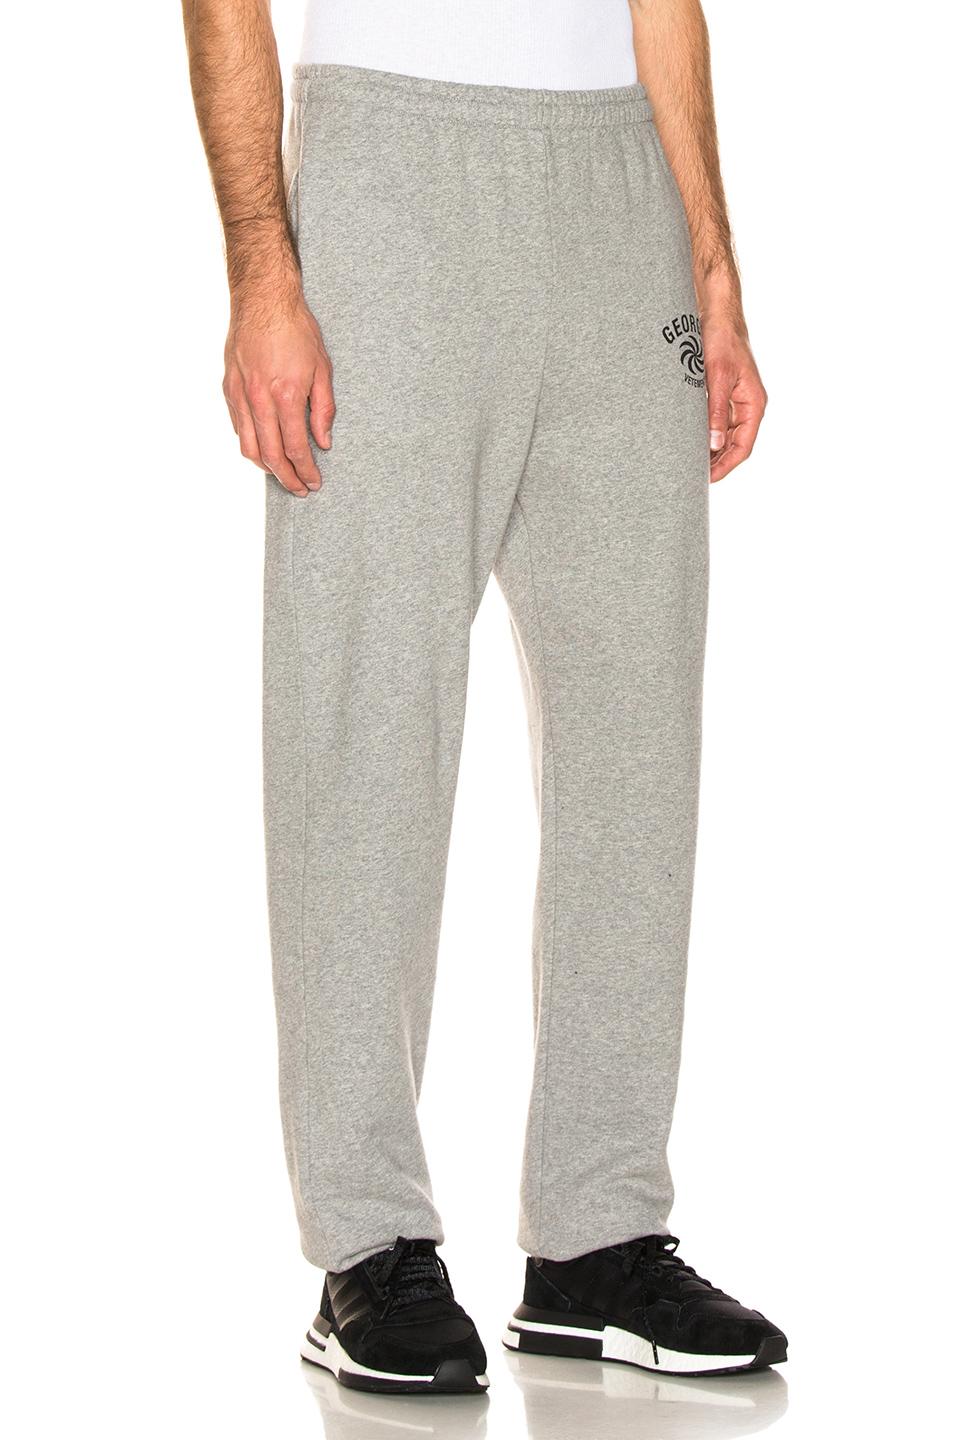 Vetements Cotton Georgia Jogging Pants in Grey (Gray) for Men - Lyst